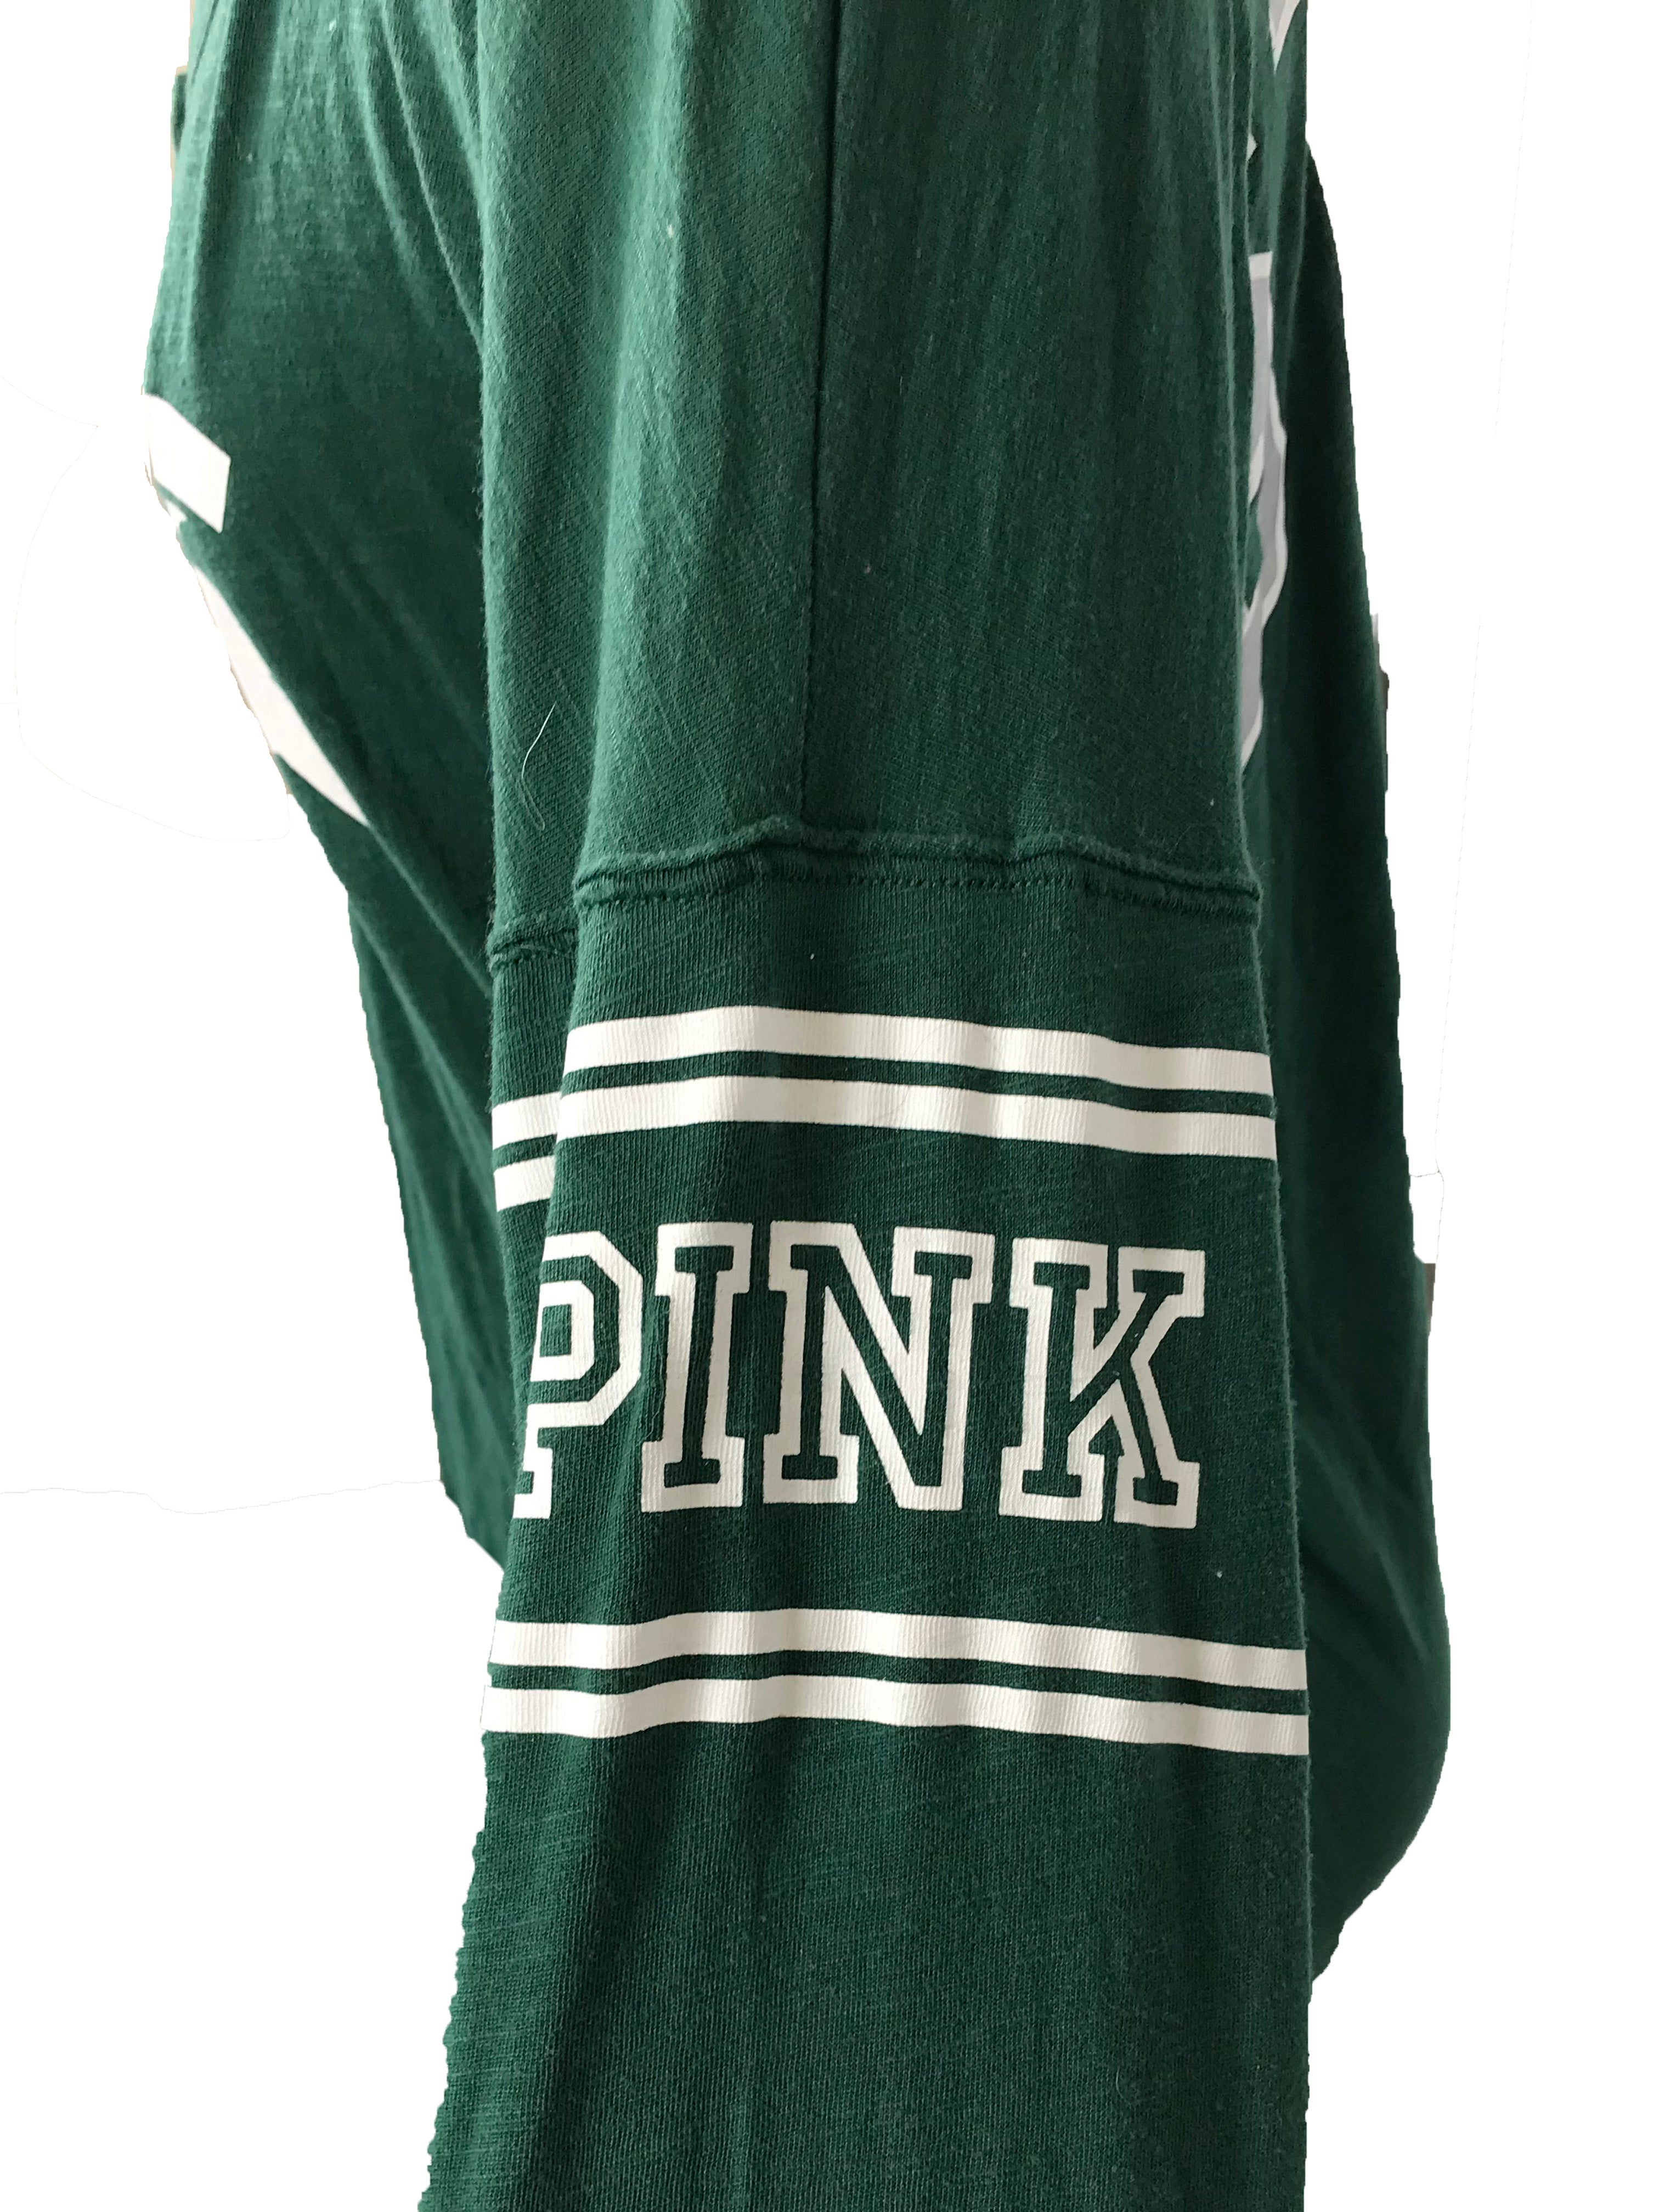 Victoria's Secret Pink MSU Green Long-Sleeve T-Shirt Women's Size X-Small